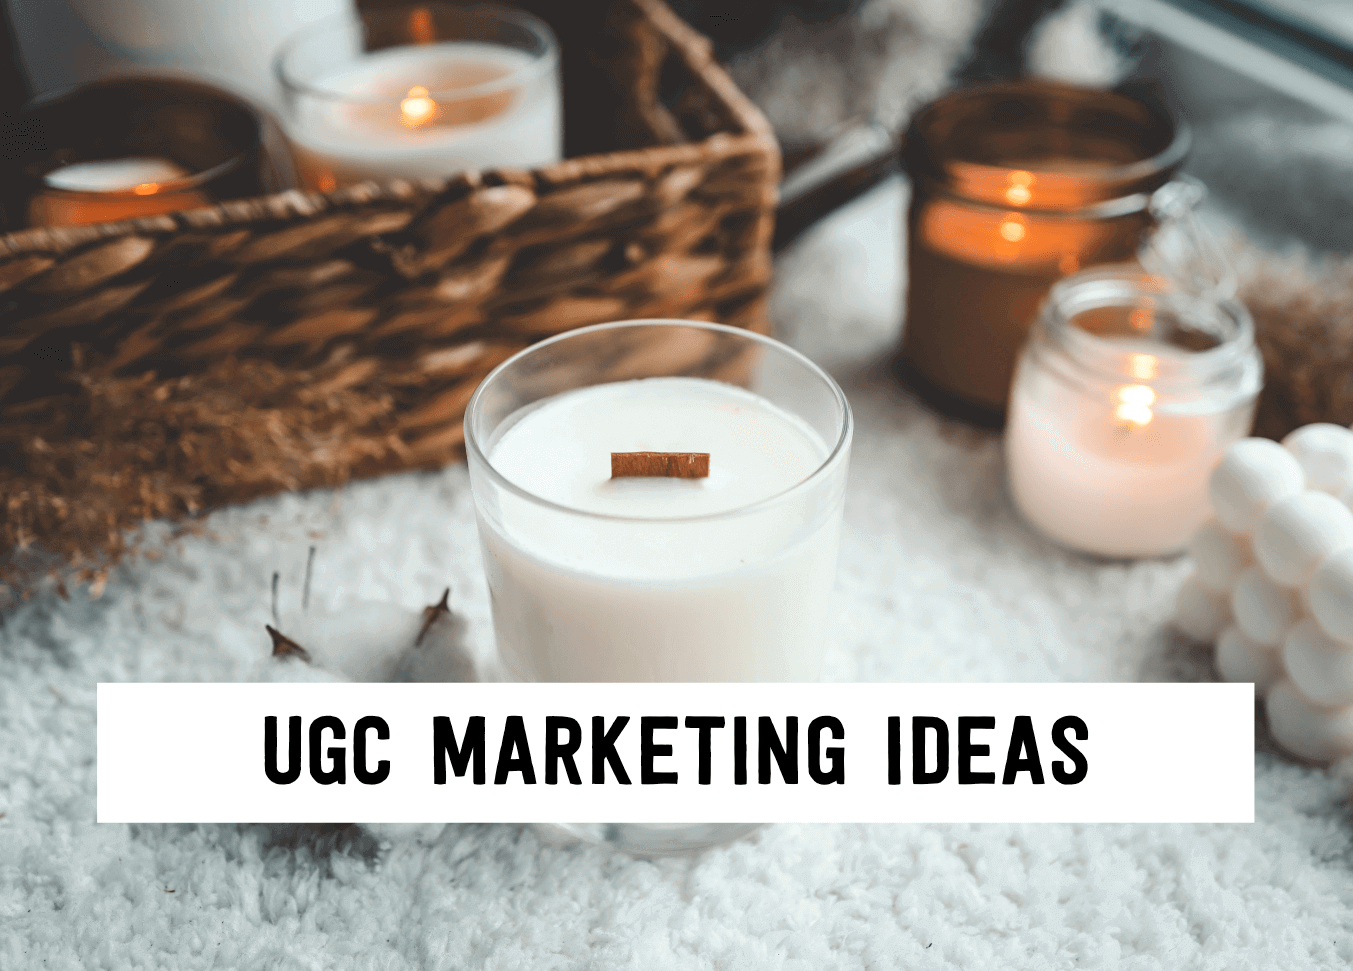 UGC marketing ideas | Tizzit.co - start and grow a successful handmade business